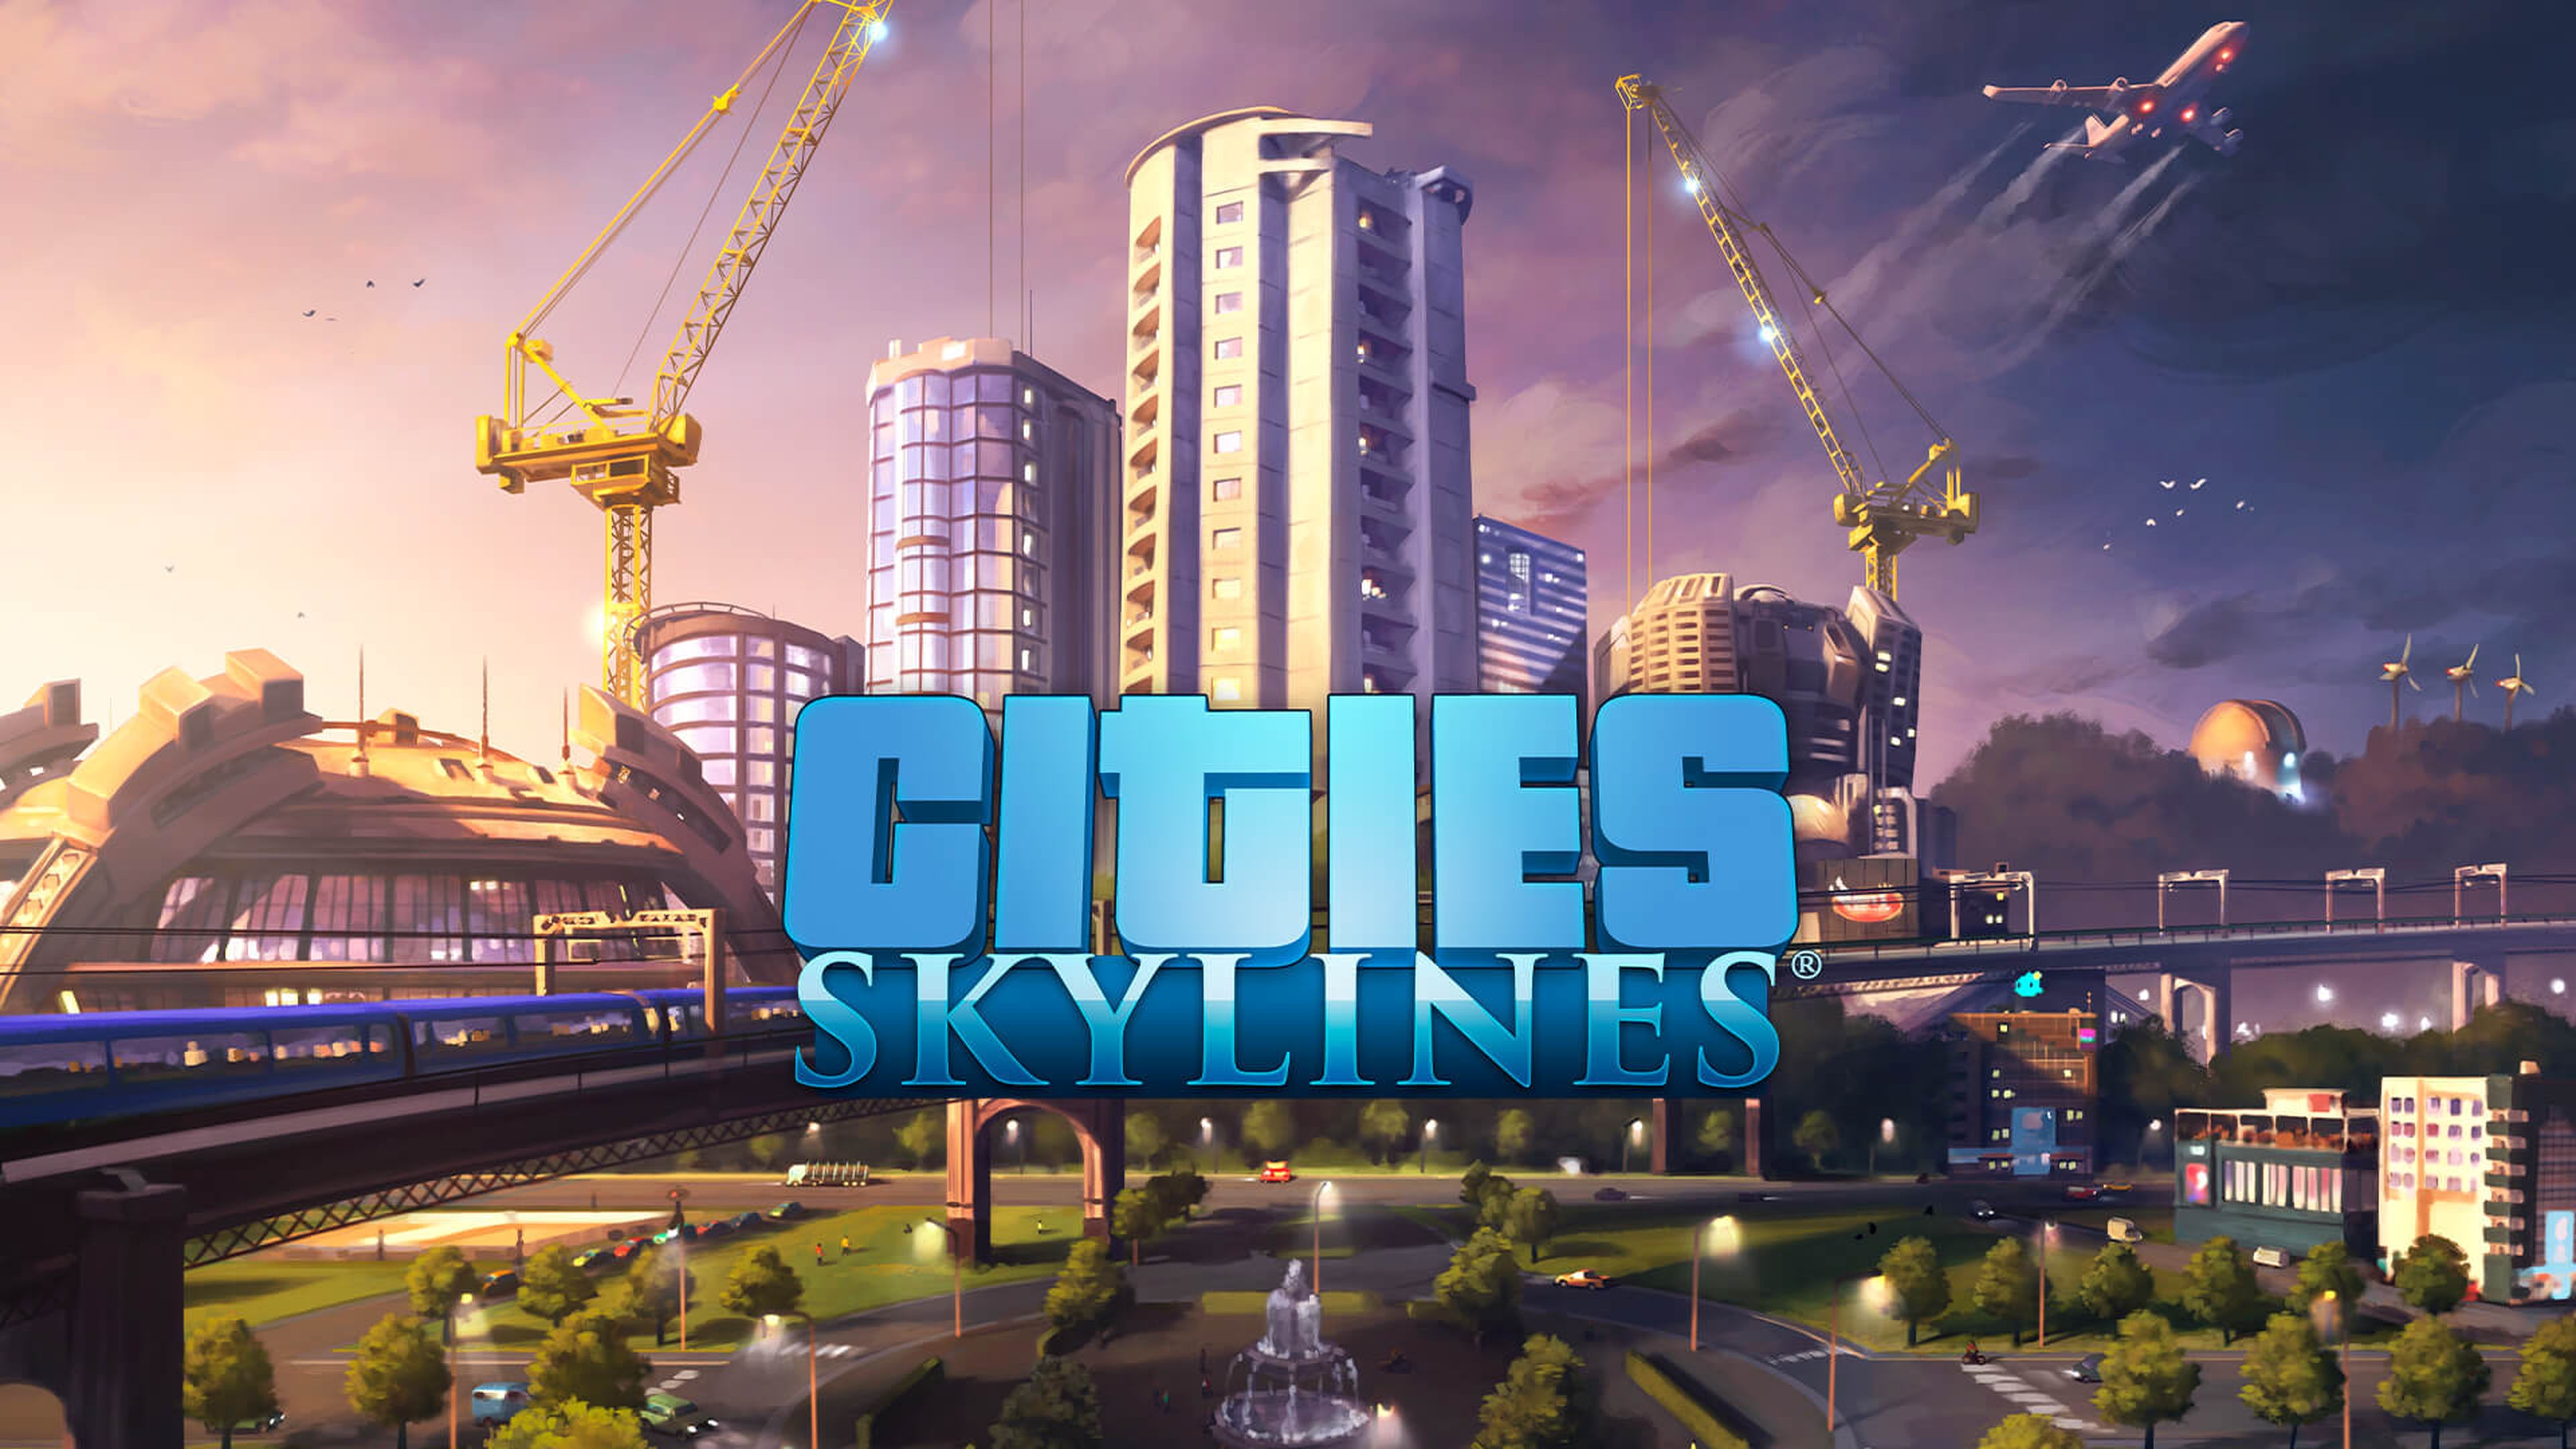 Cities Skyline